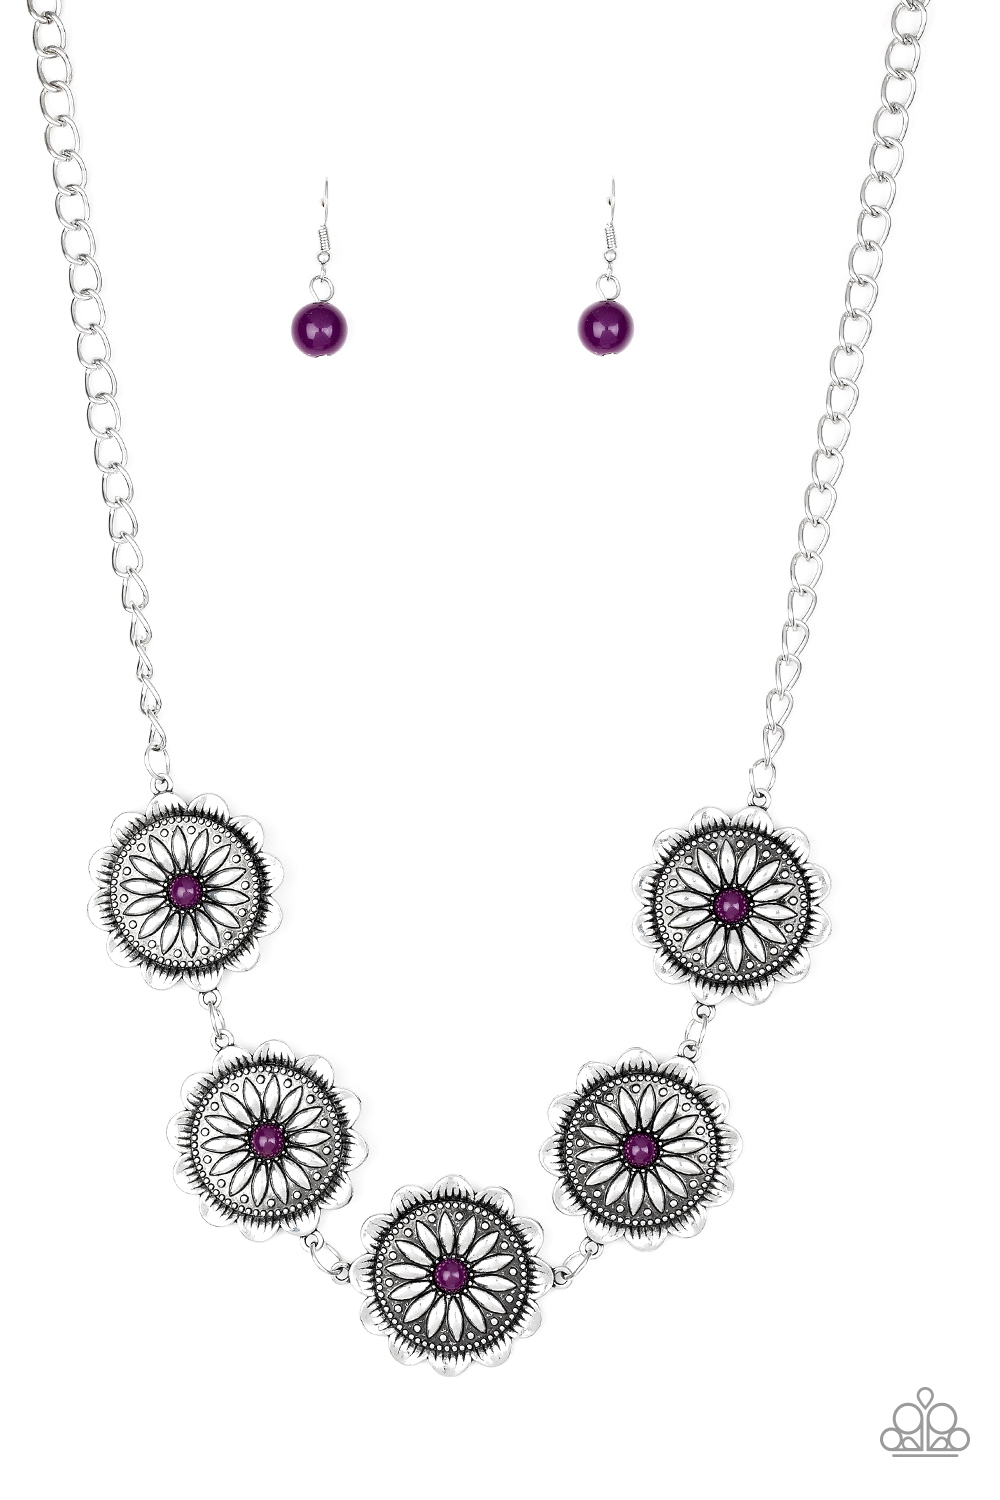 Necklace - Me-dallions, Myself, and I - Purple